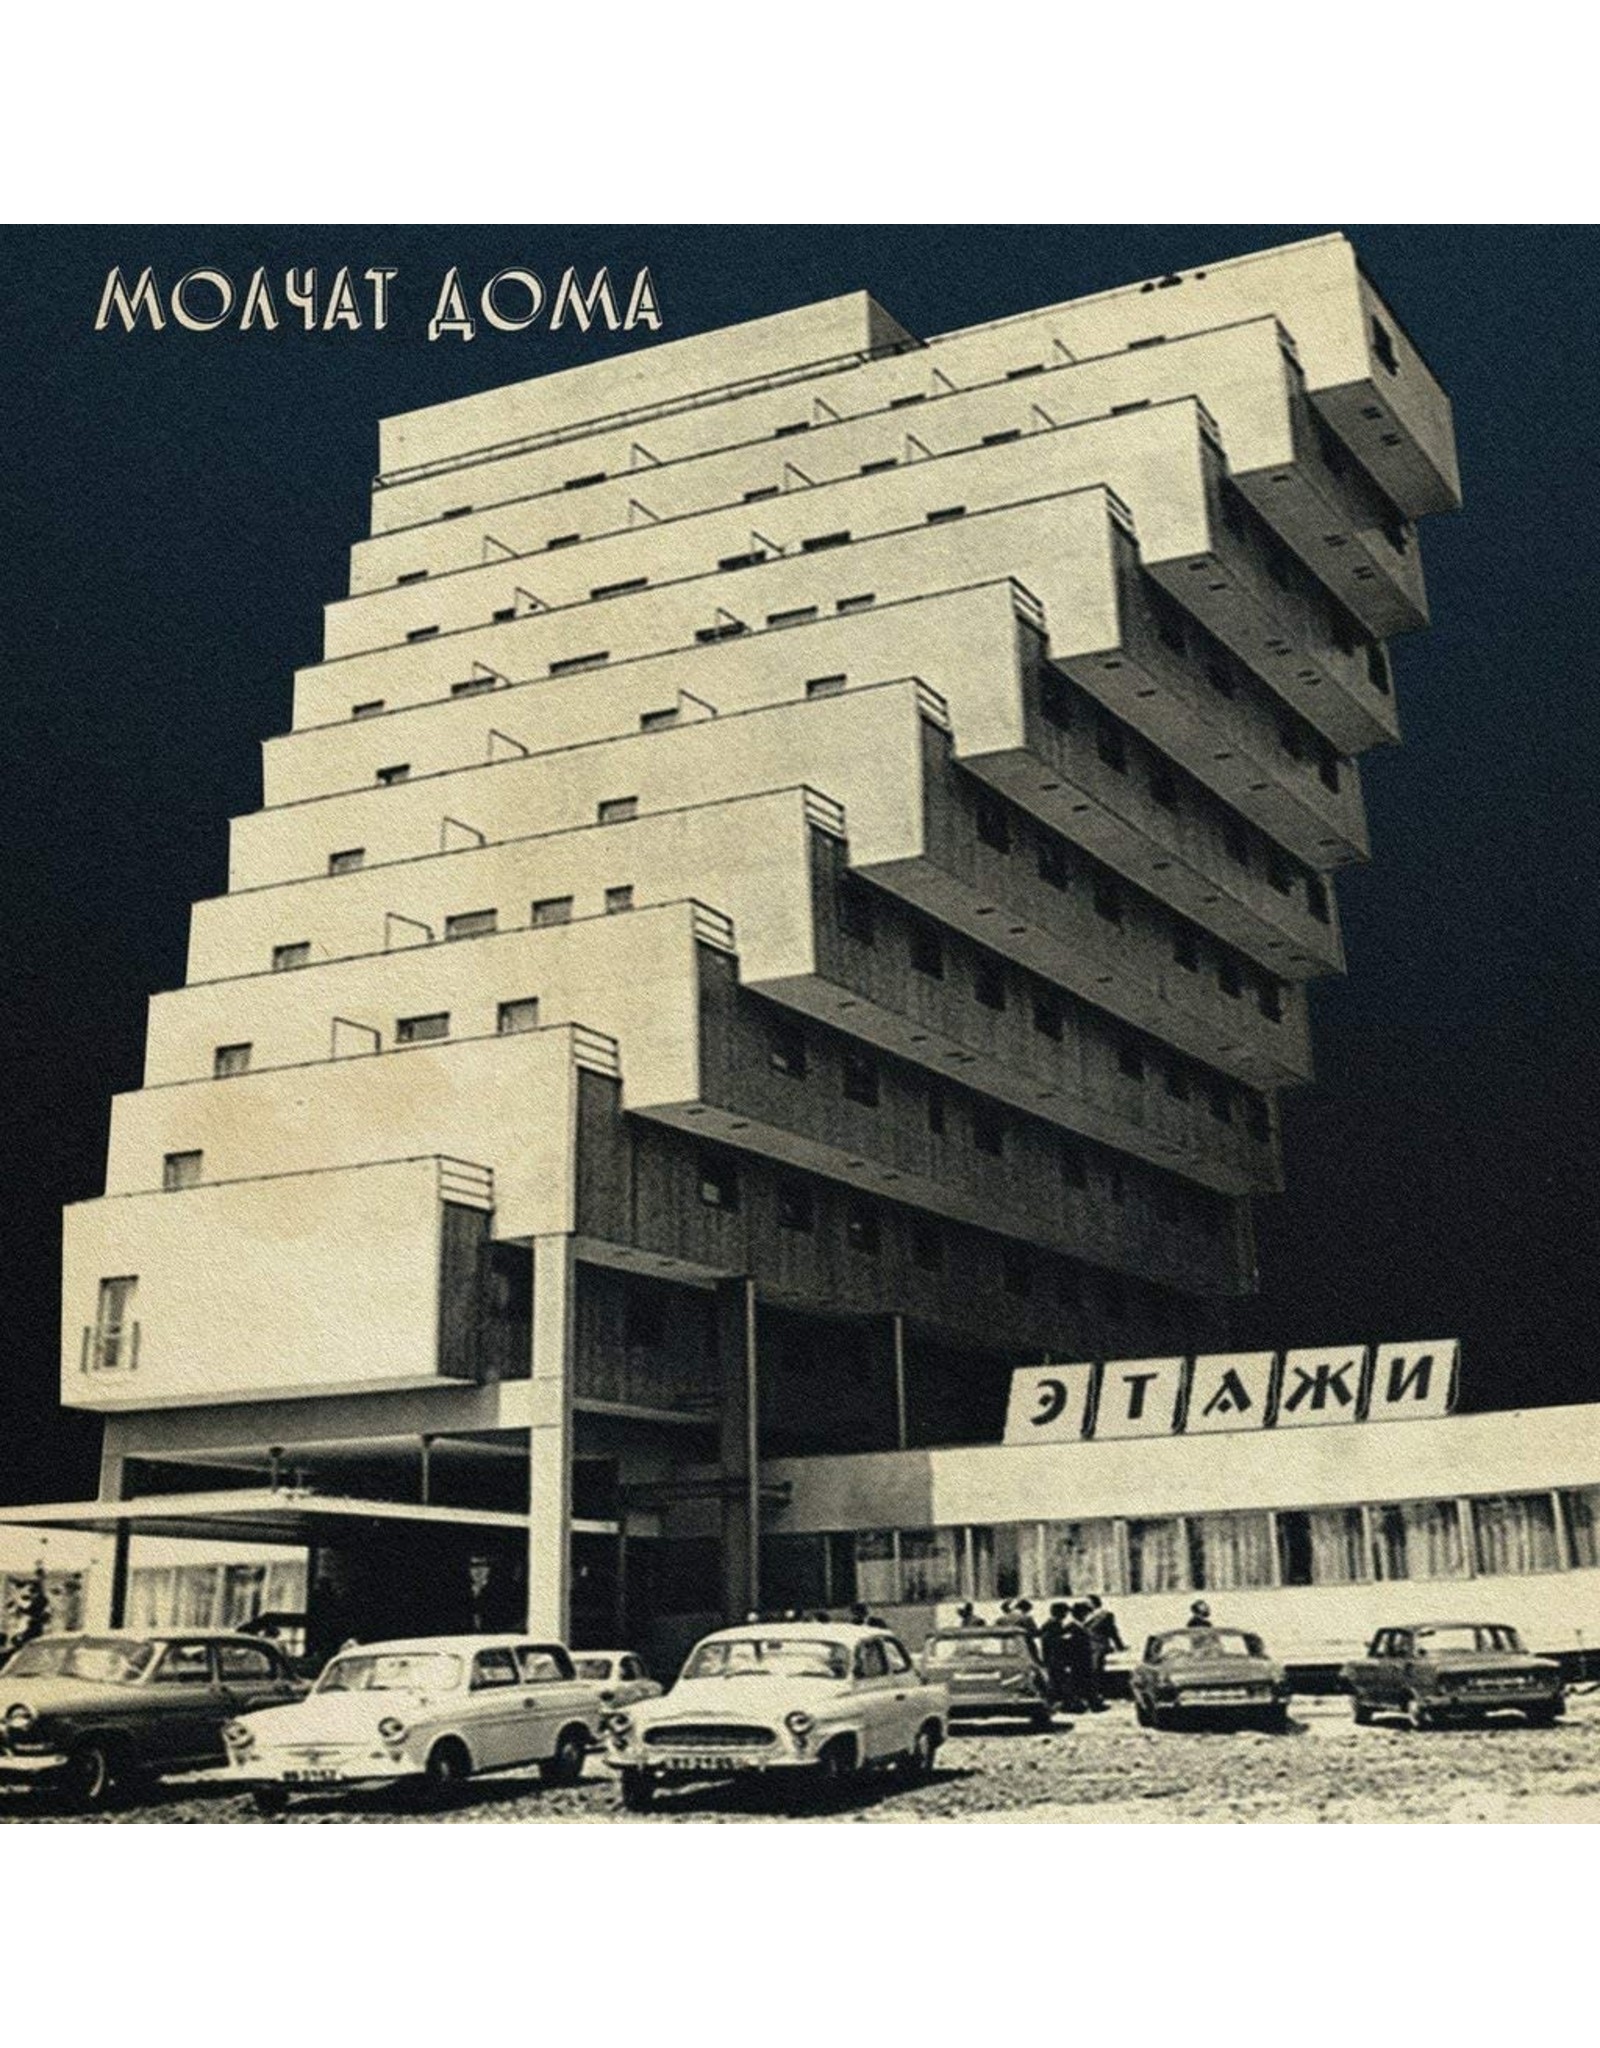 Molchat Doma - Etazhi